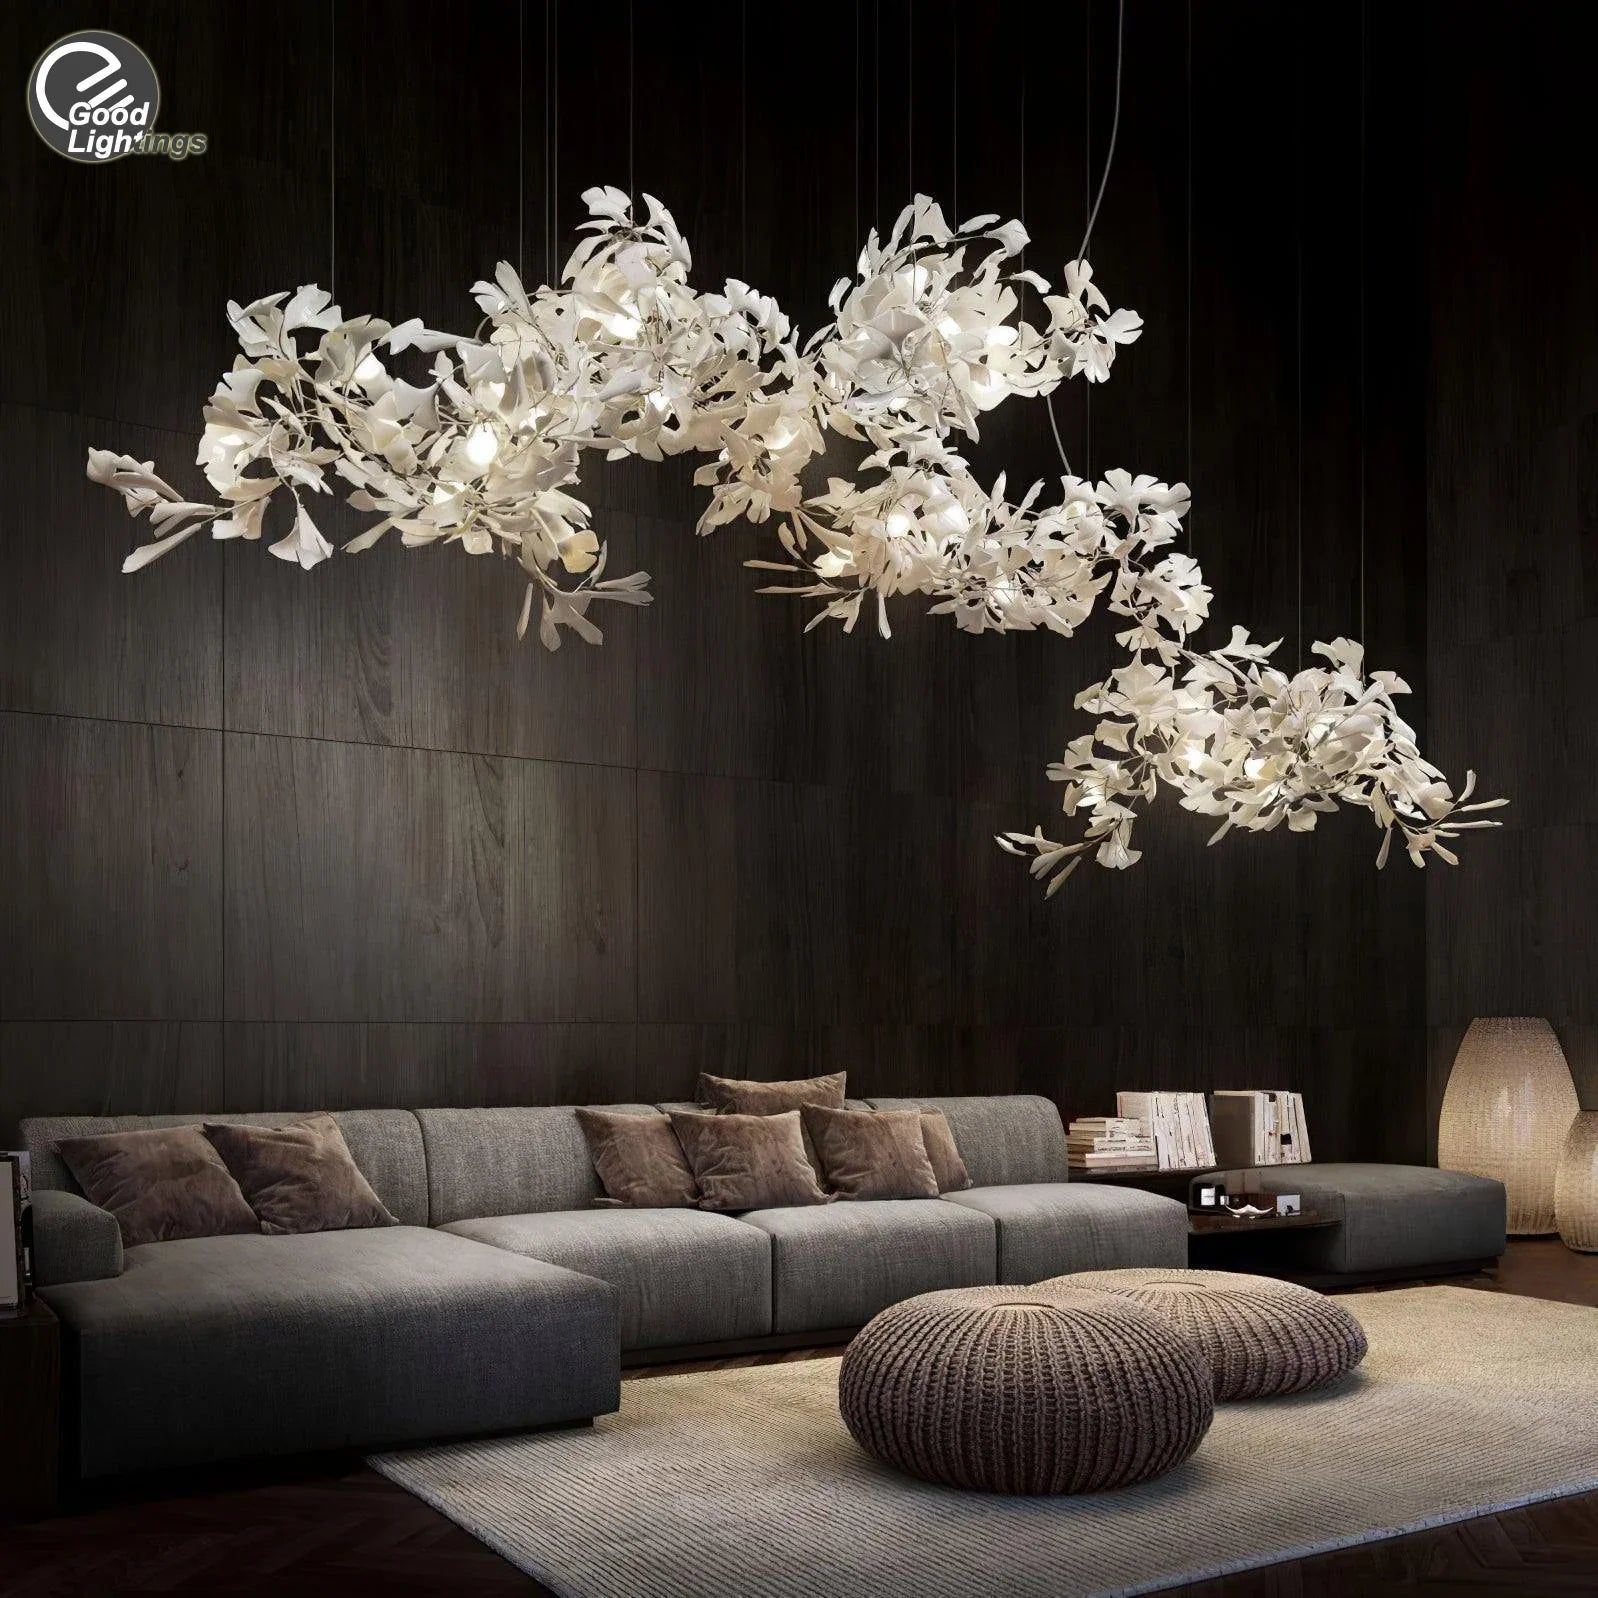 Elegant Chandelier Lighting : Stunning Selections of Elegant Chandelier Lighting Available for Your Home or Business